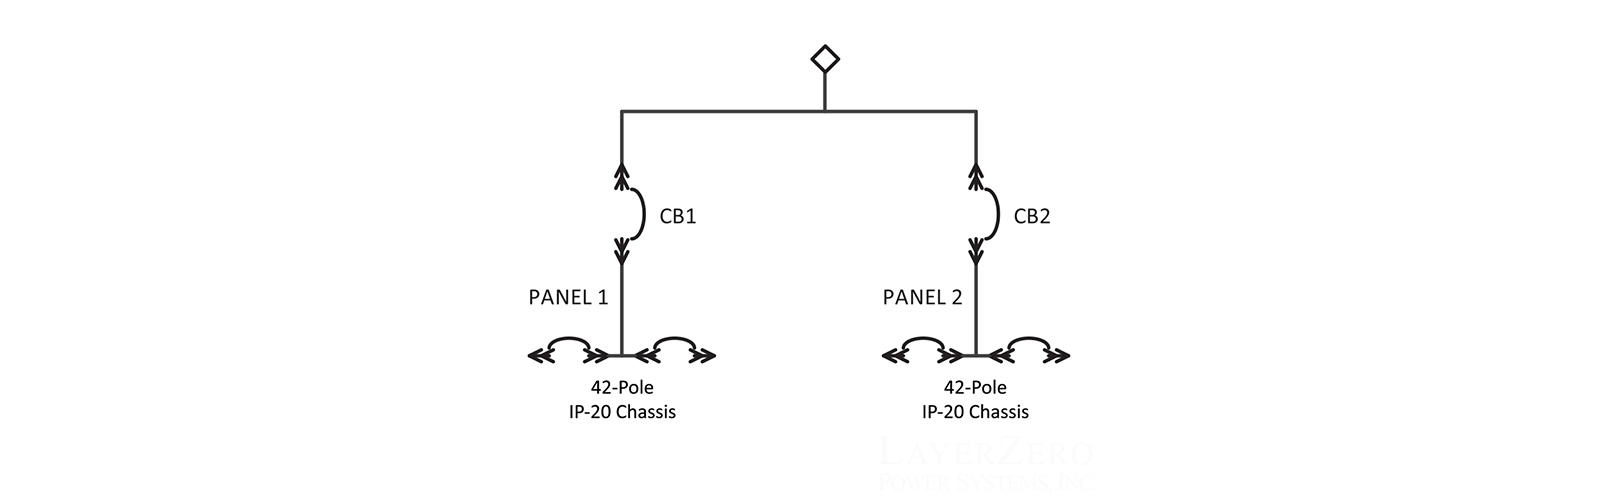 Power Panels Schematic Diagram